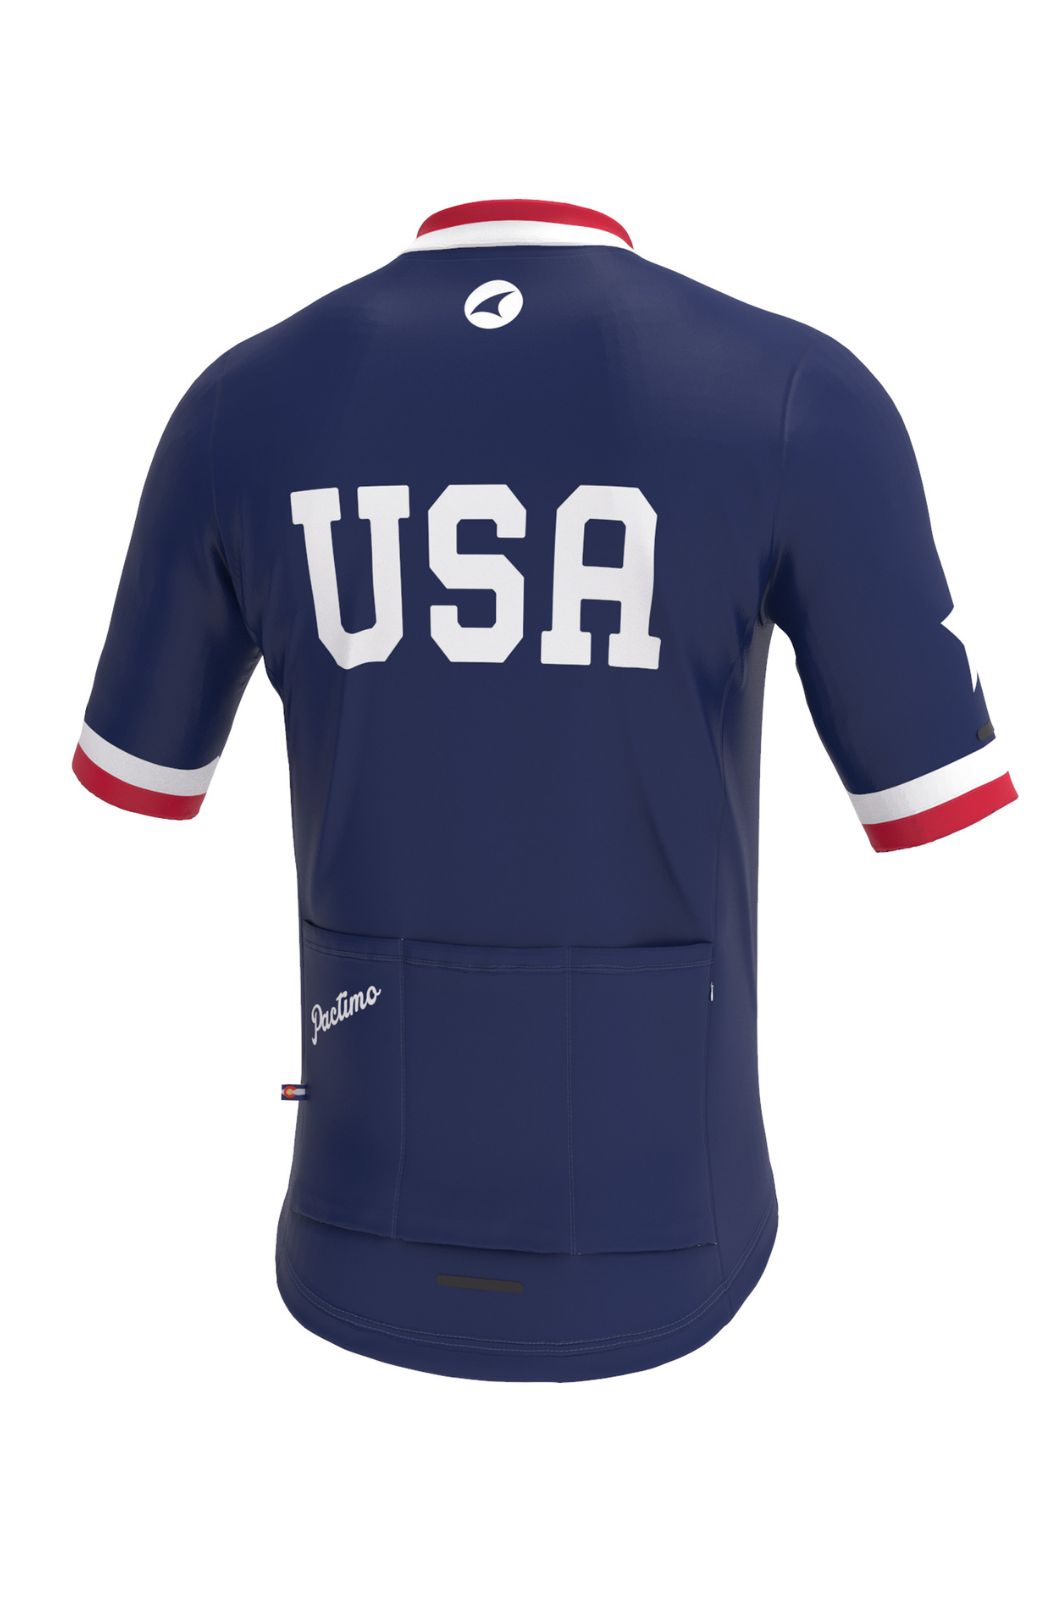 Men's Retro USA Cycling Jersey - Back View